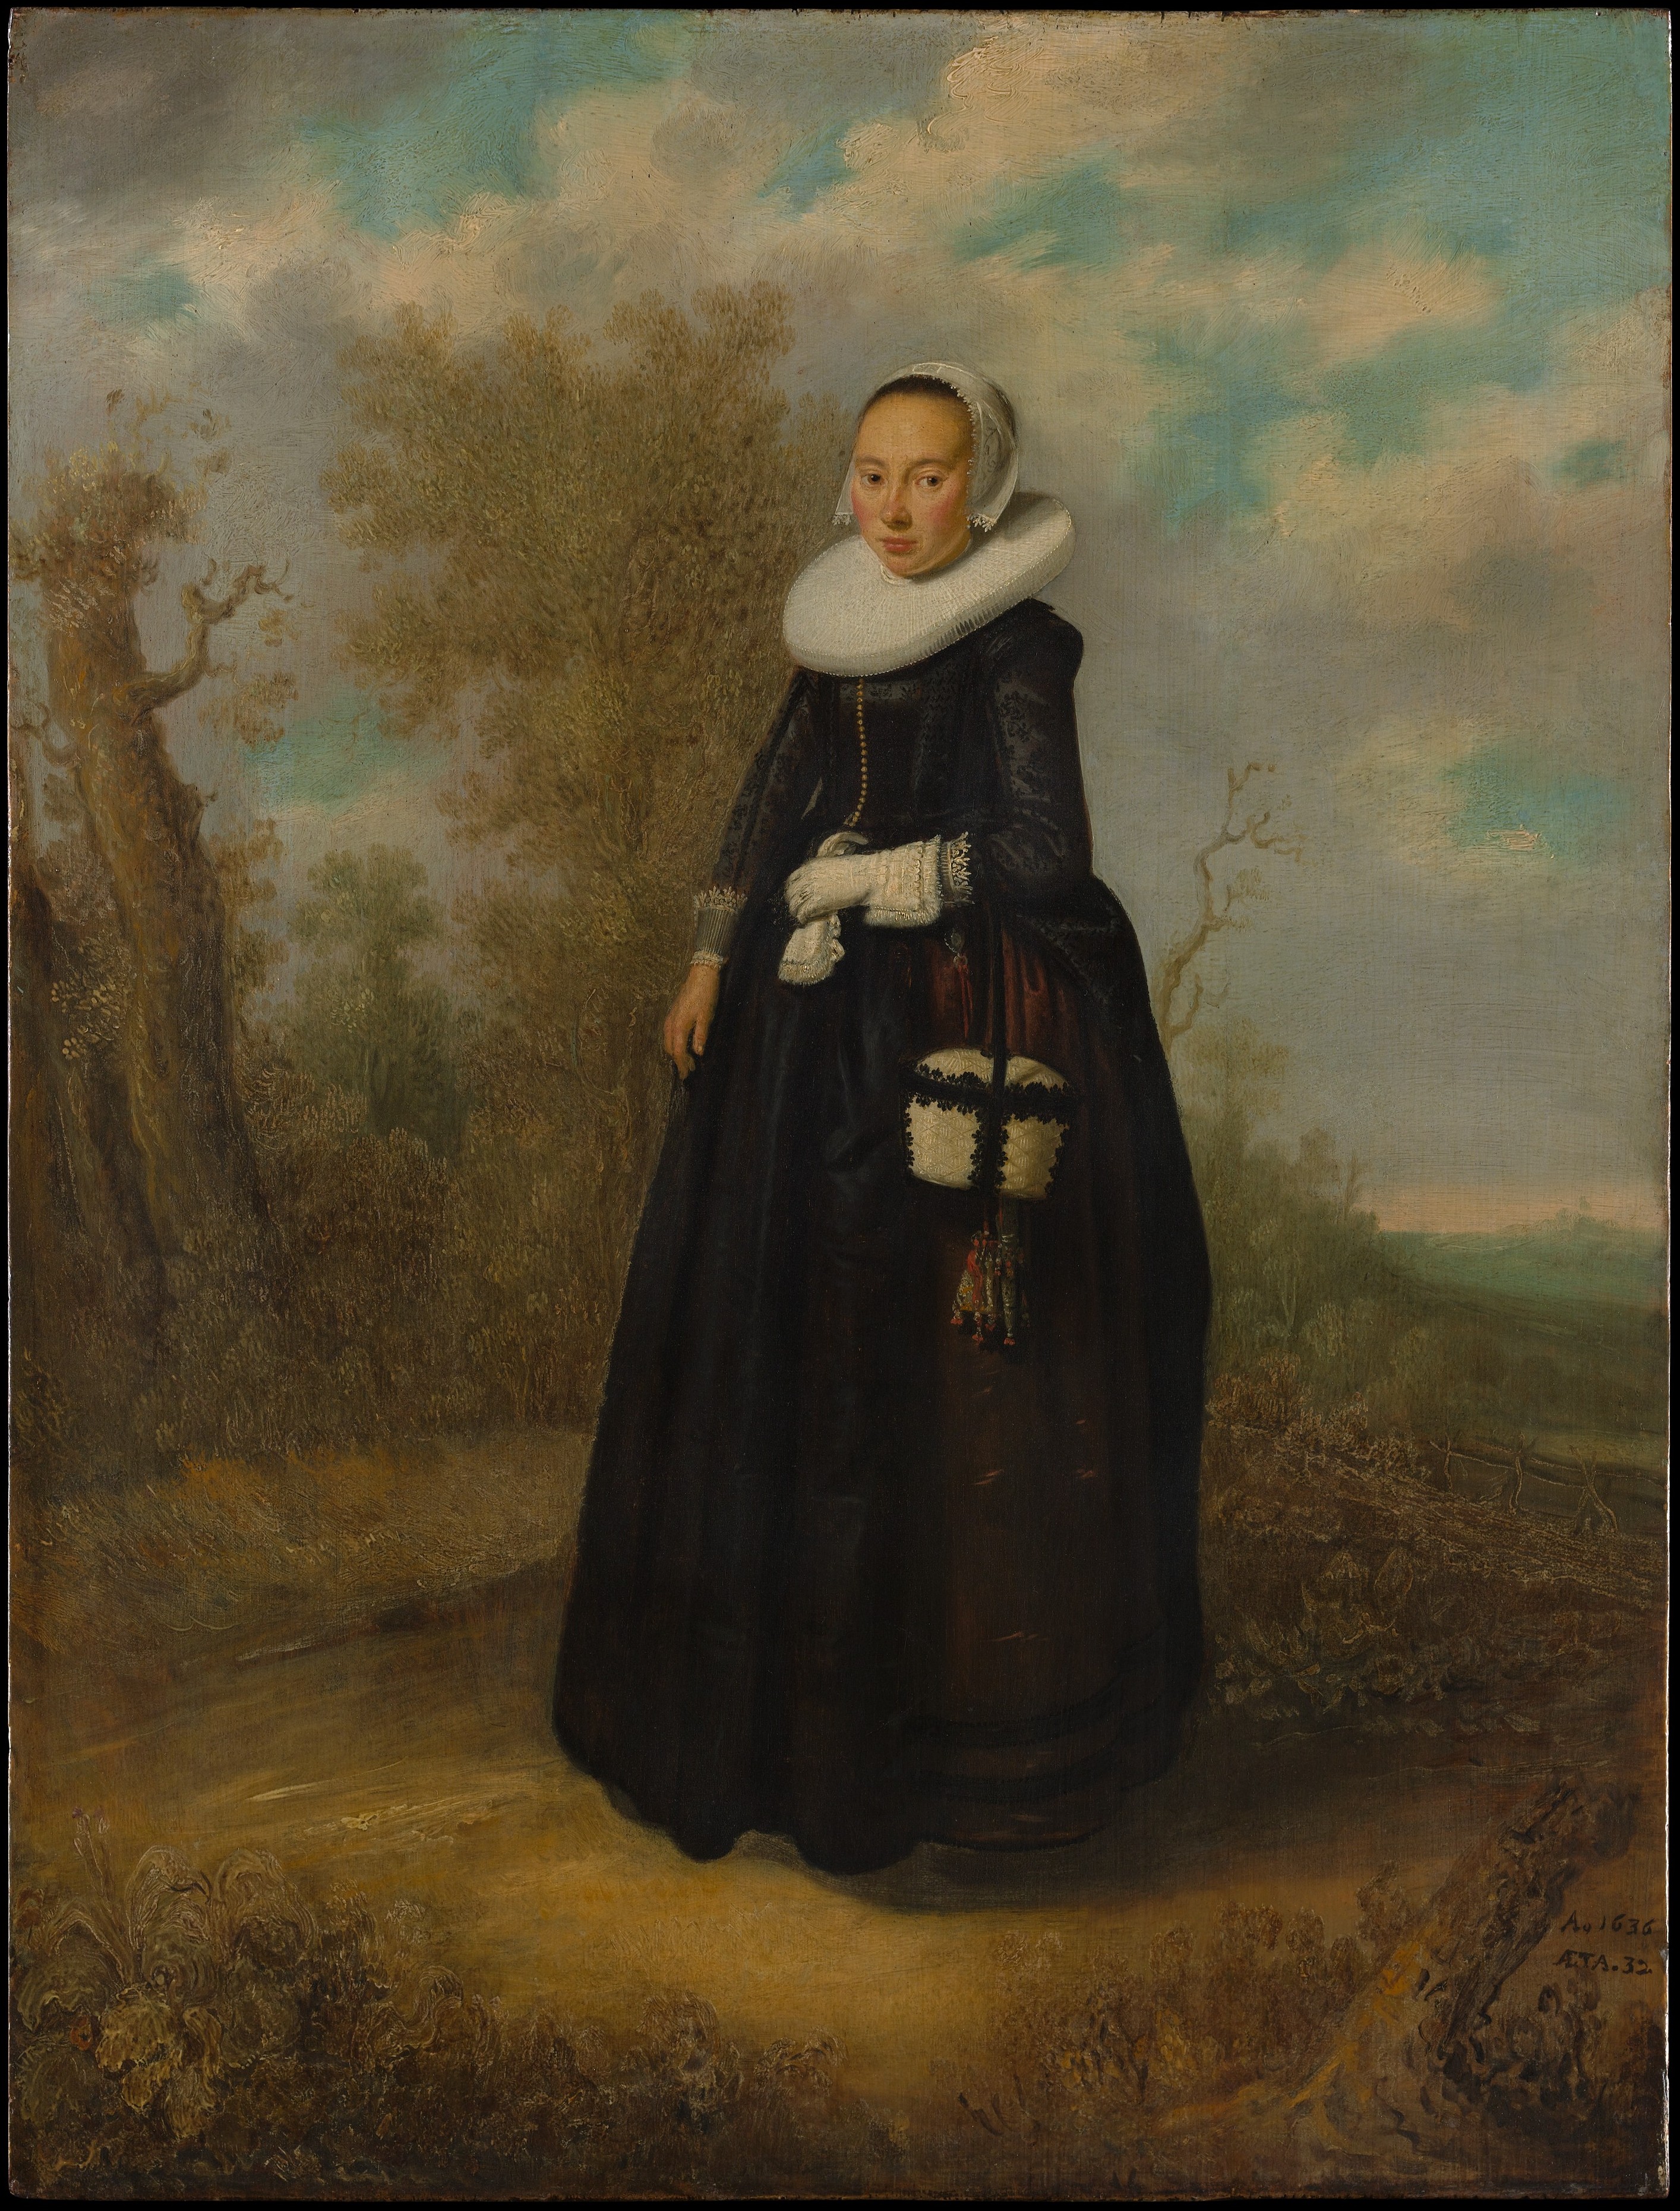 Fiatal nő a tájban by Unknown Artist - 1636 - 66 x 50.5 cm 